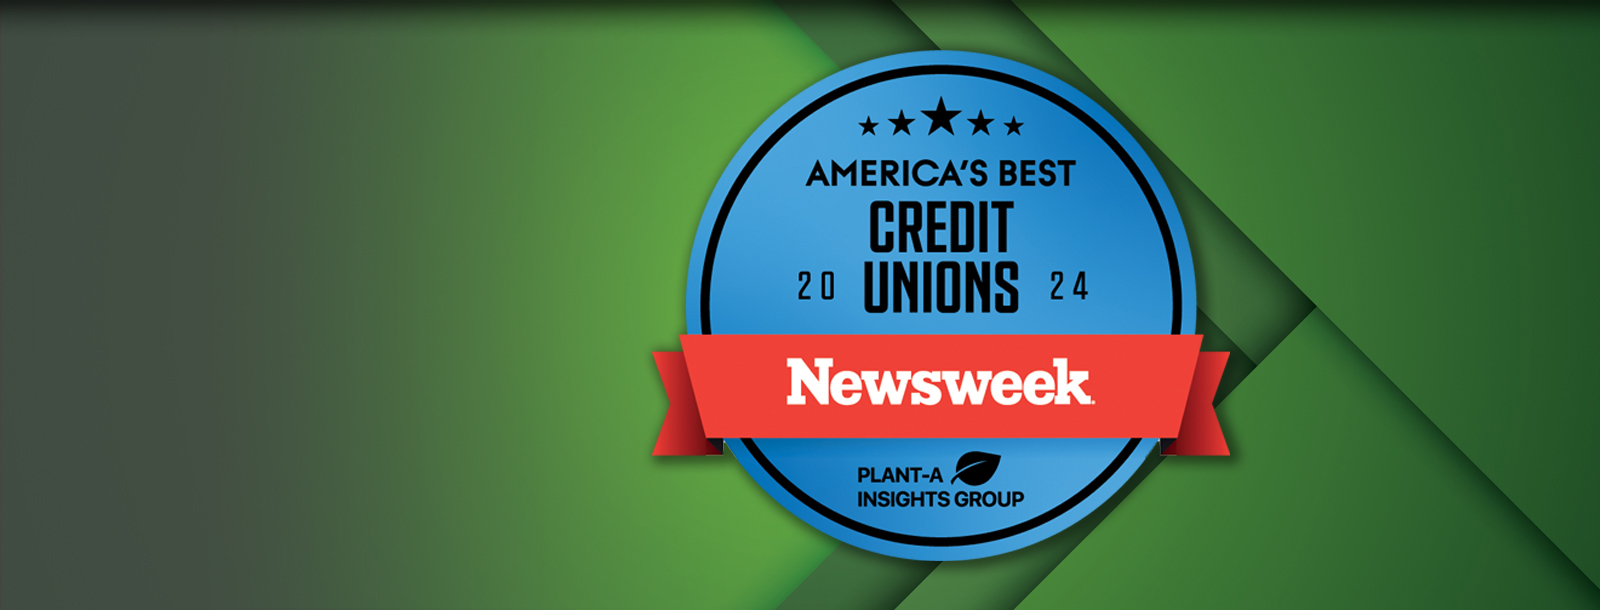 Newsweek Award | Team One Credit Union